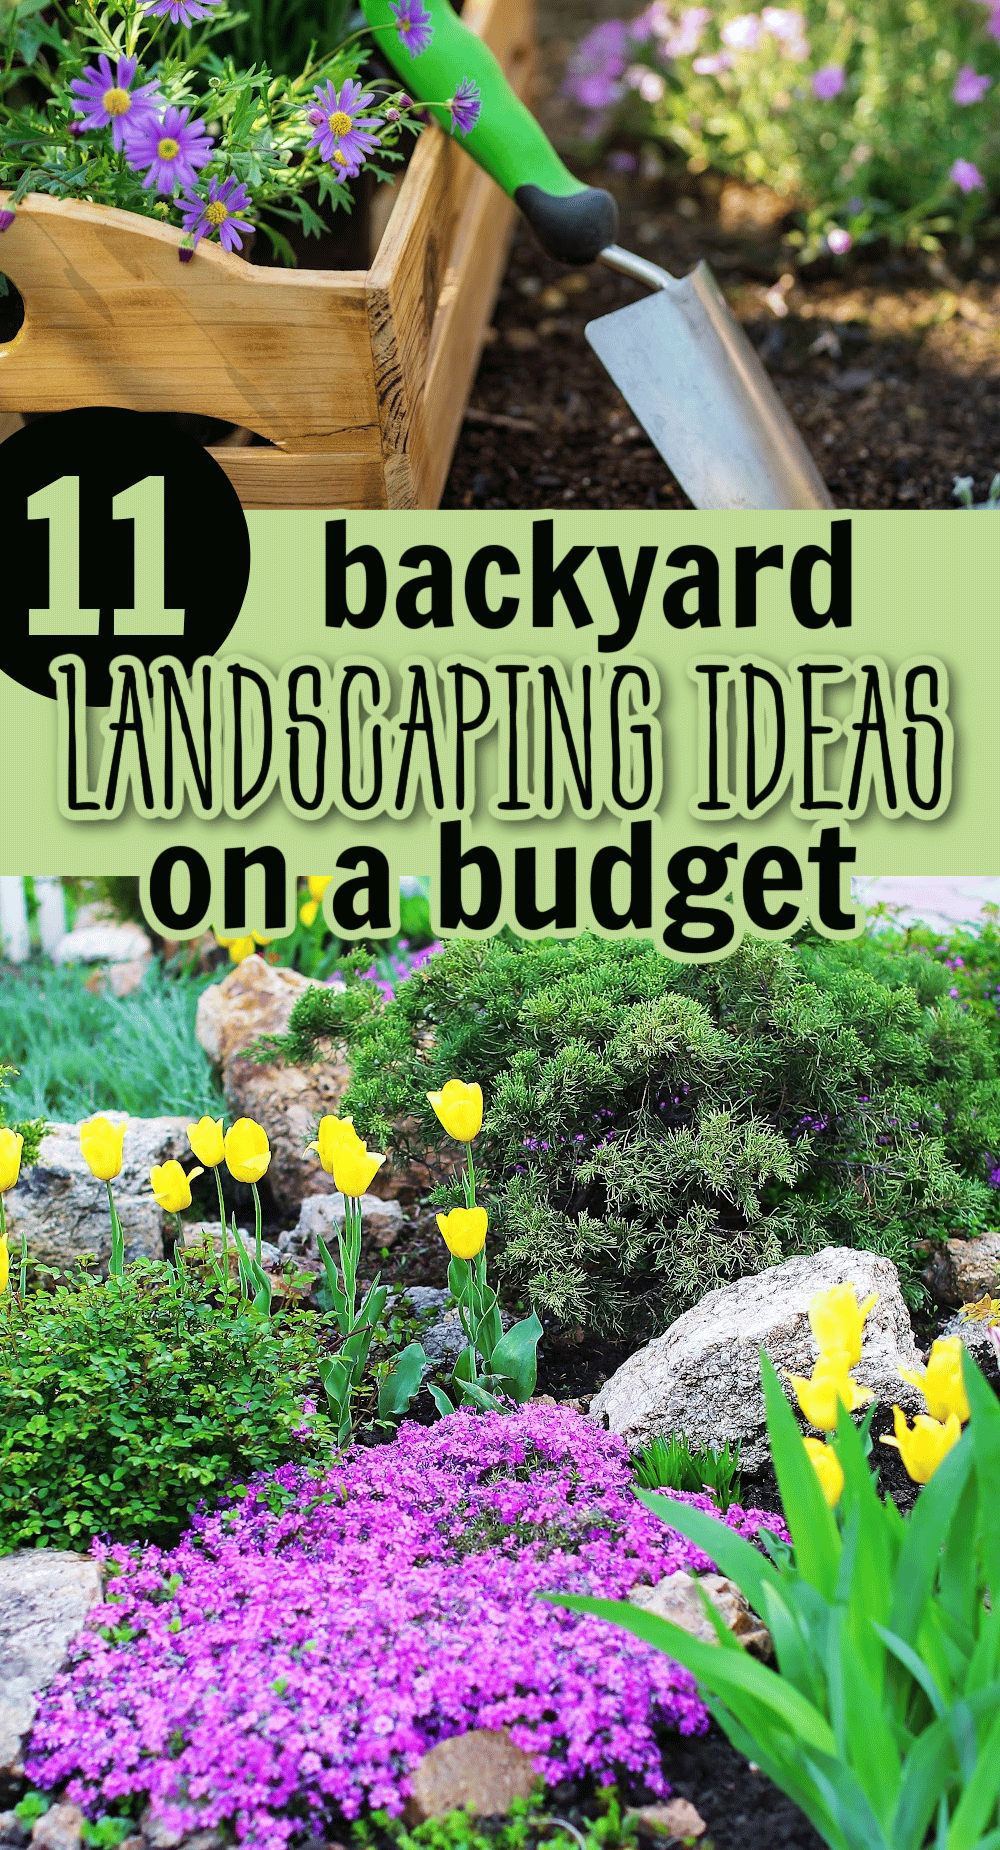 Backyard landscaping ideas on a budget